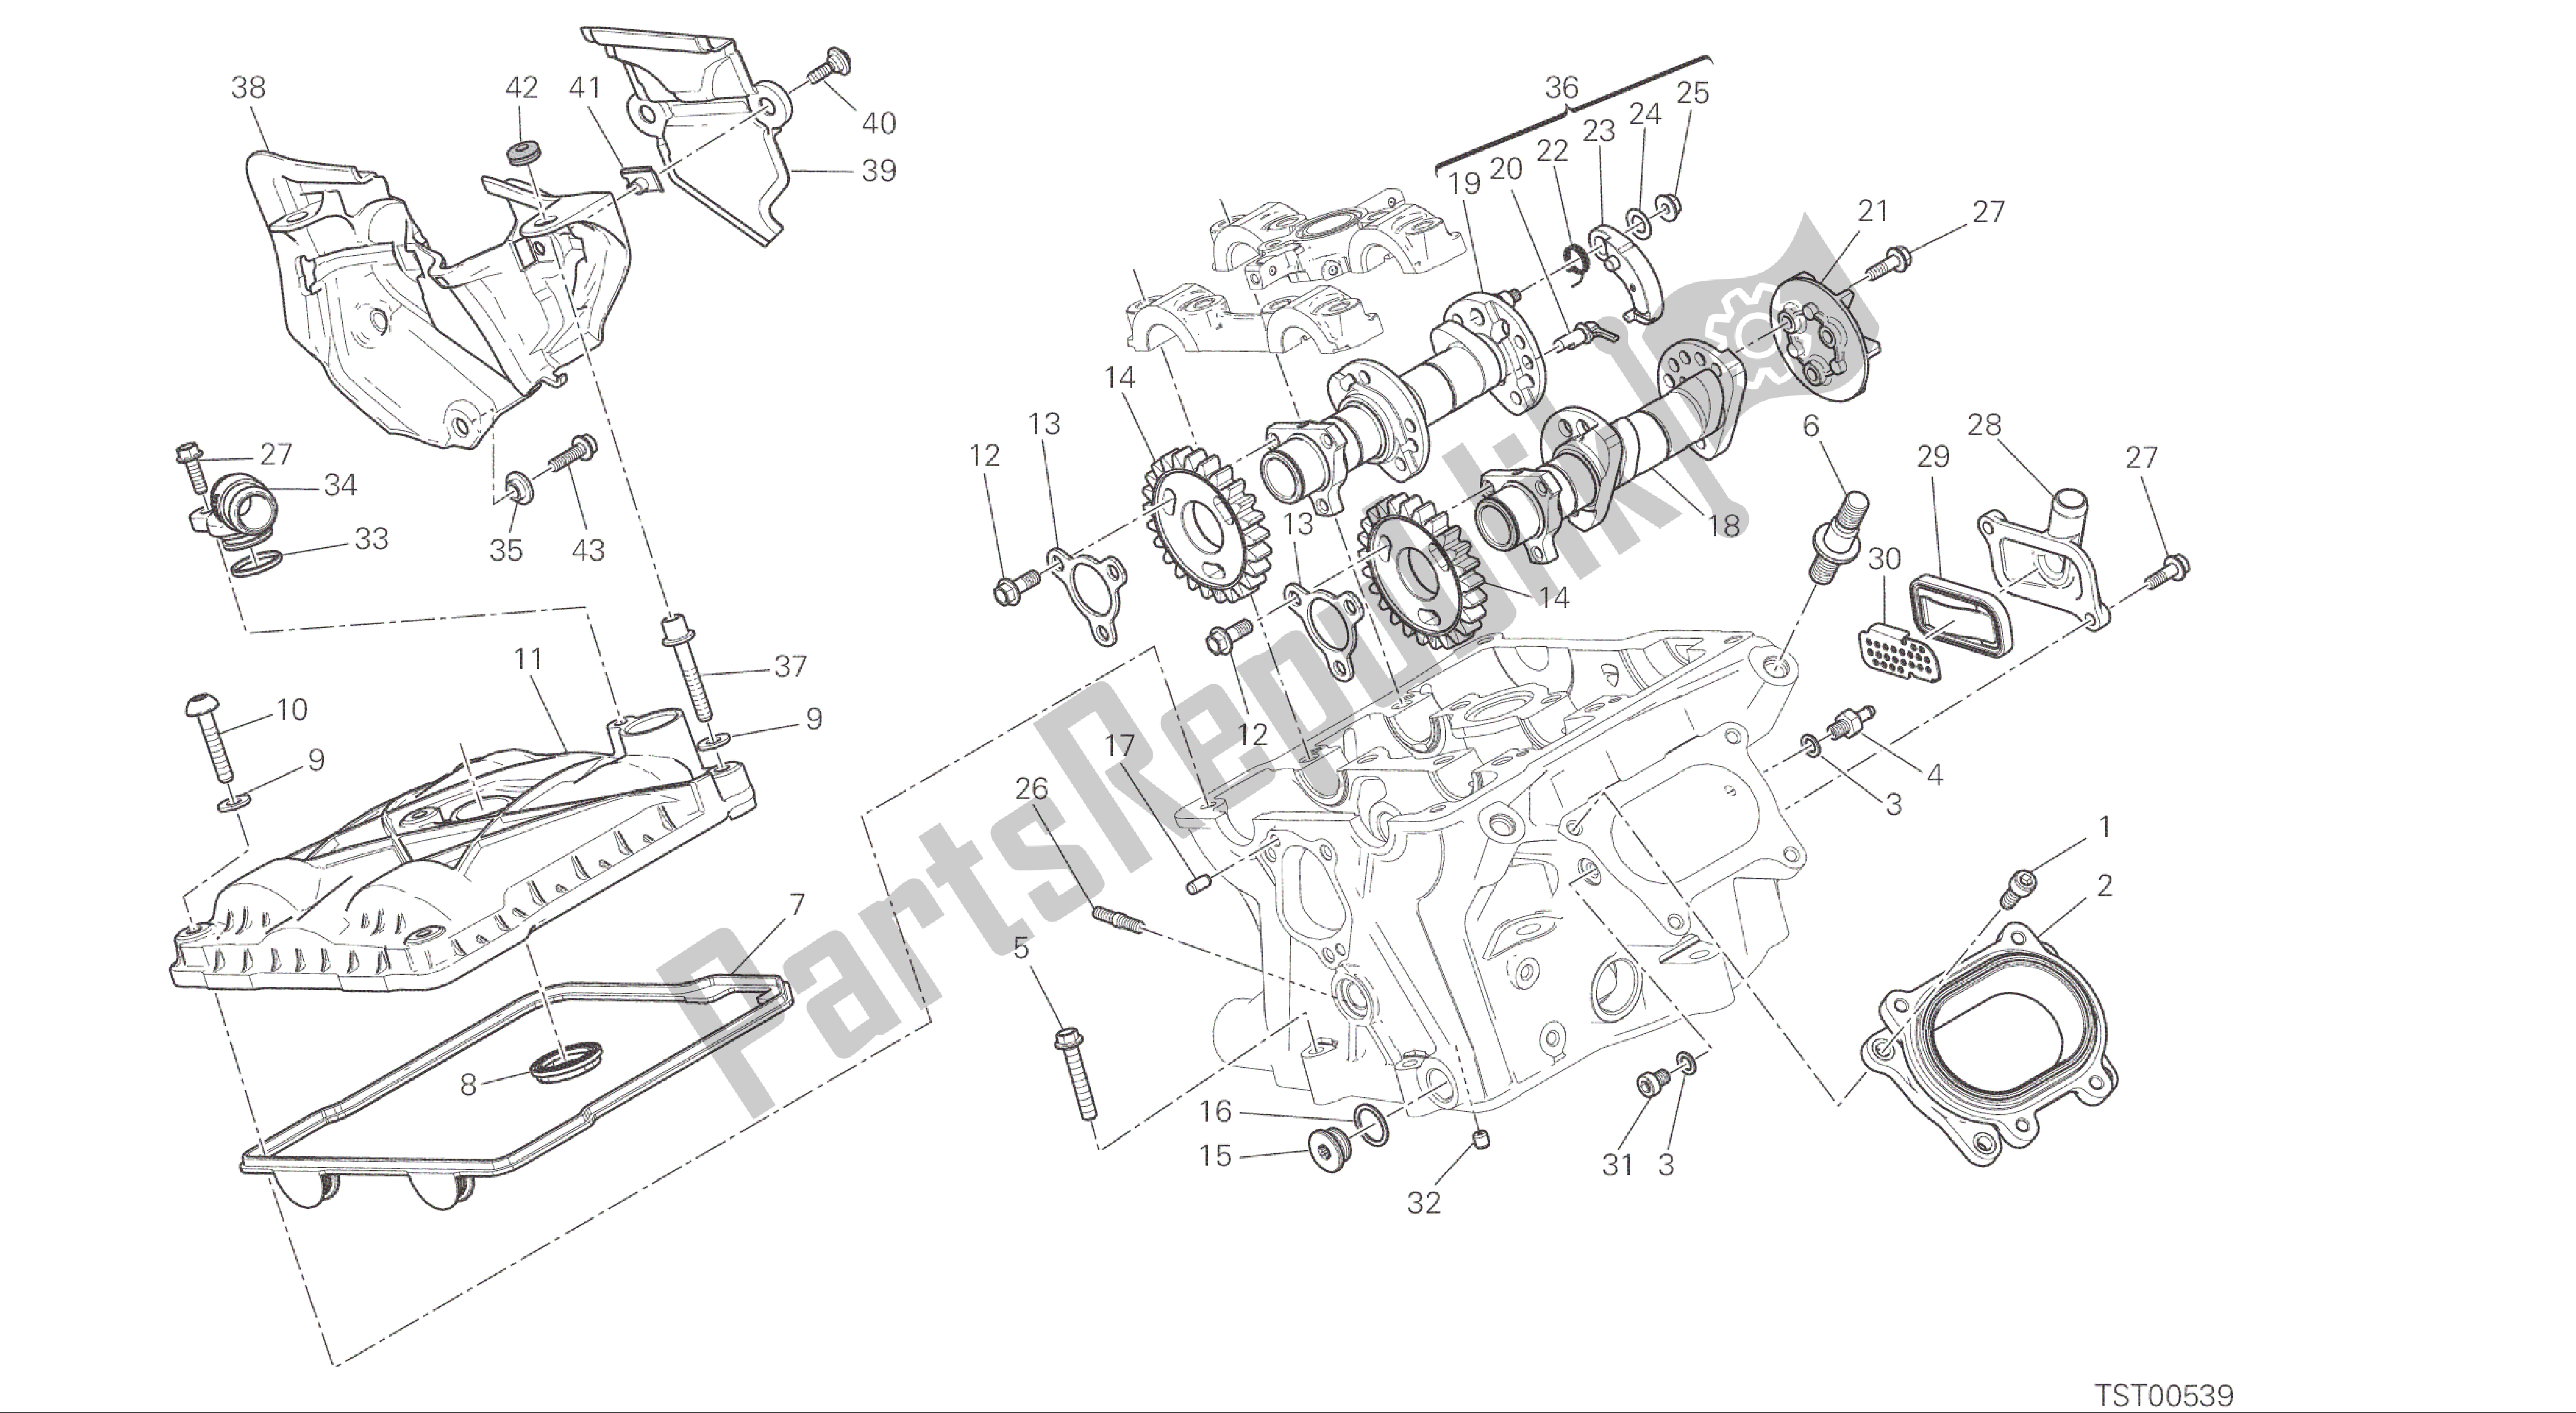 Alle onderdelen voor de Tekening 13a - Verticale Cilinderkop - Timing [mod: 1299; Xst: Aus, Eur, Fra, Jap] Groepsmotor van de Ducati Panigale ABS 1299 2016